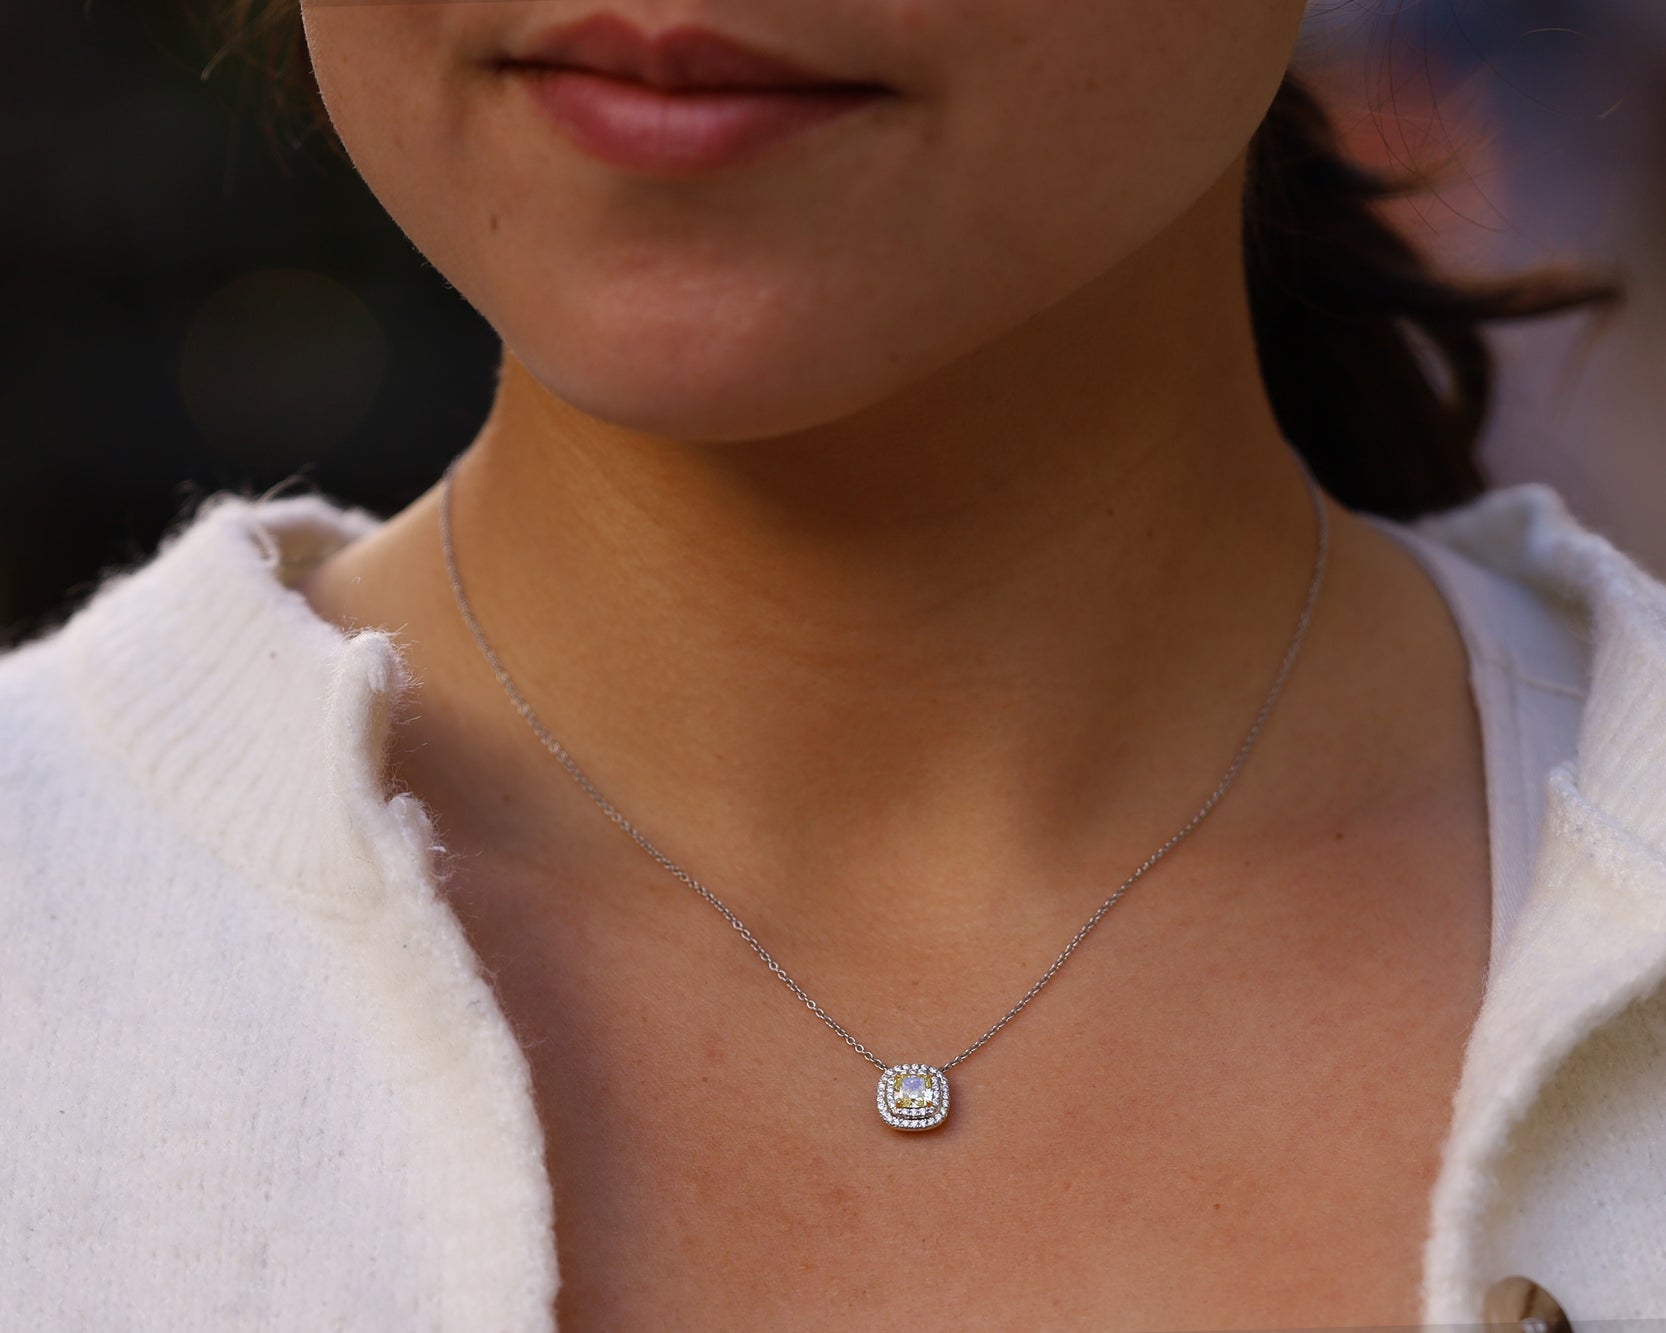 Tiffany & Co. Soleste Fancy Intense Yellow Diamond Pendant Necklace